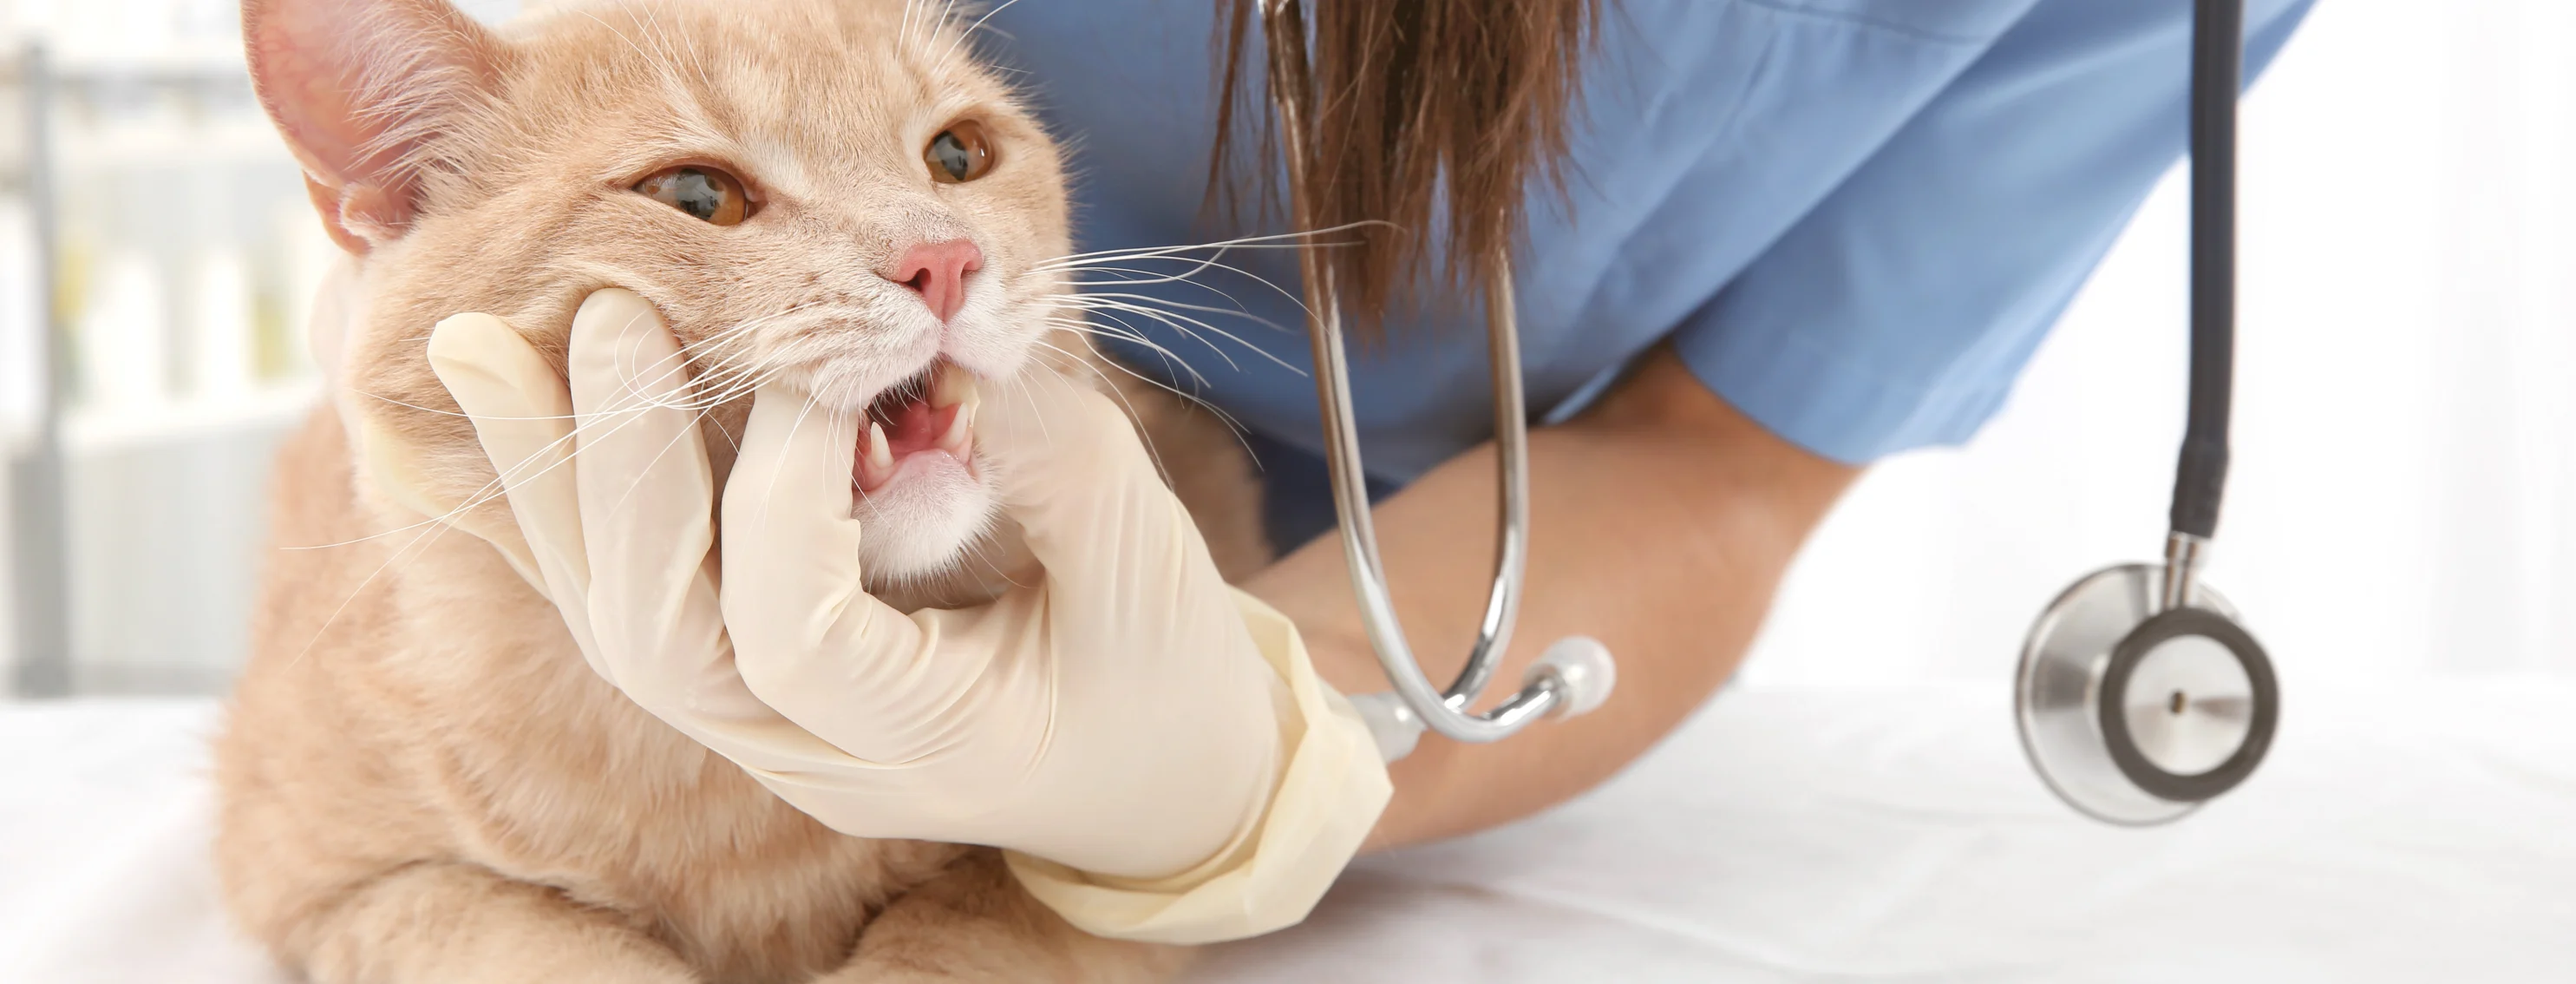 Staff member examining cat's teeth